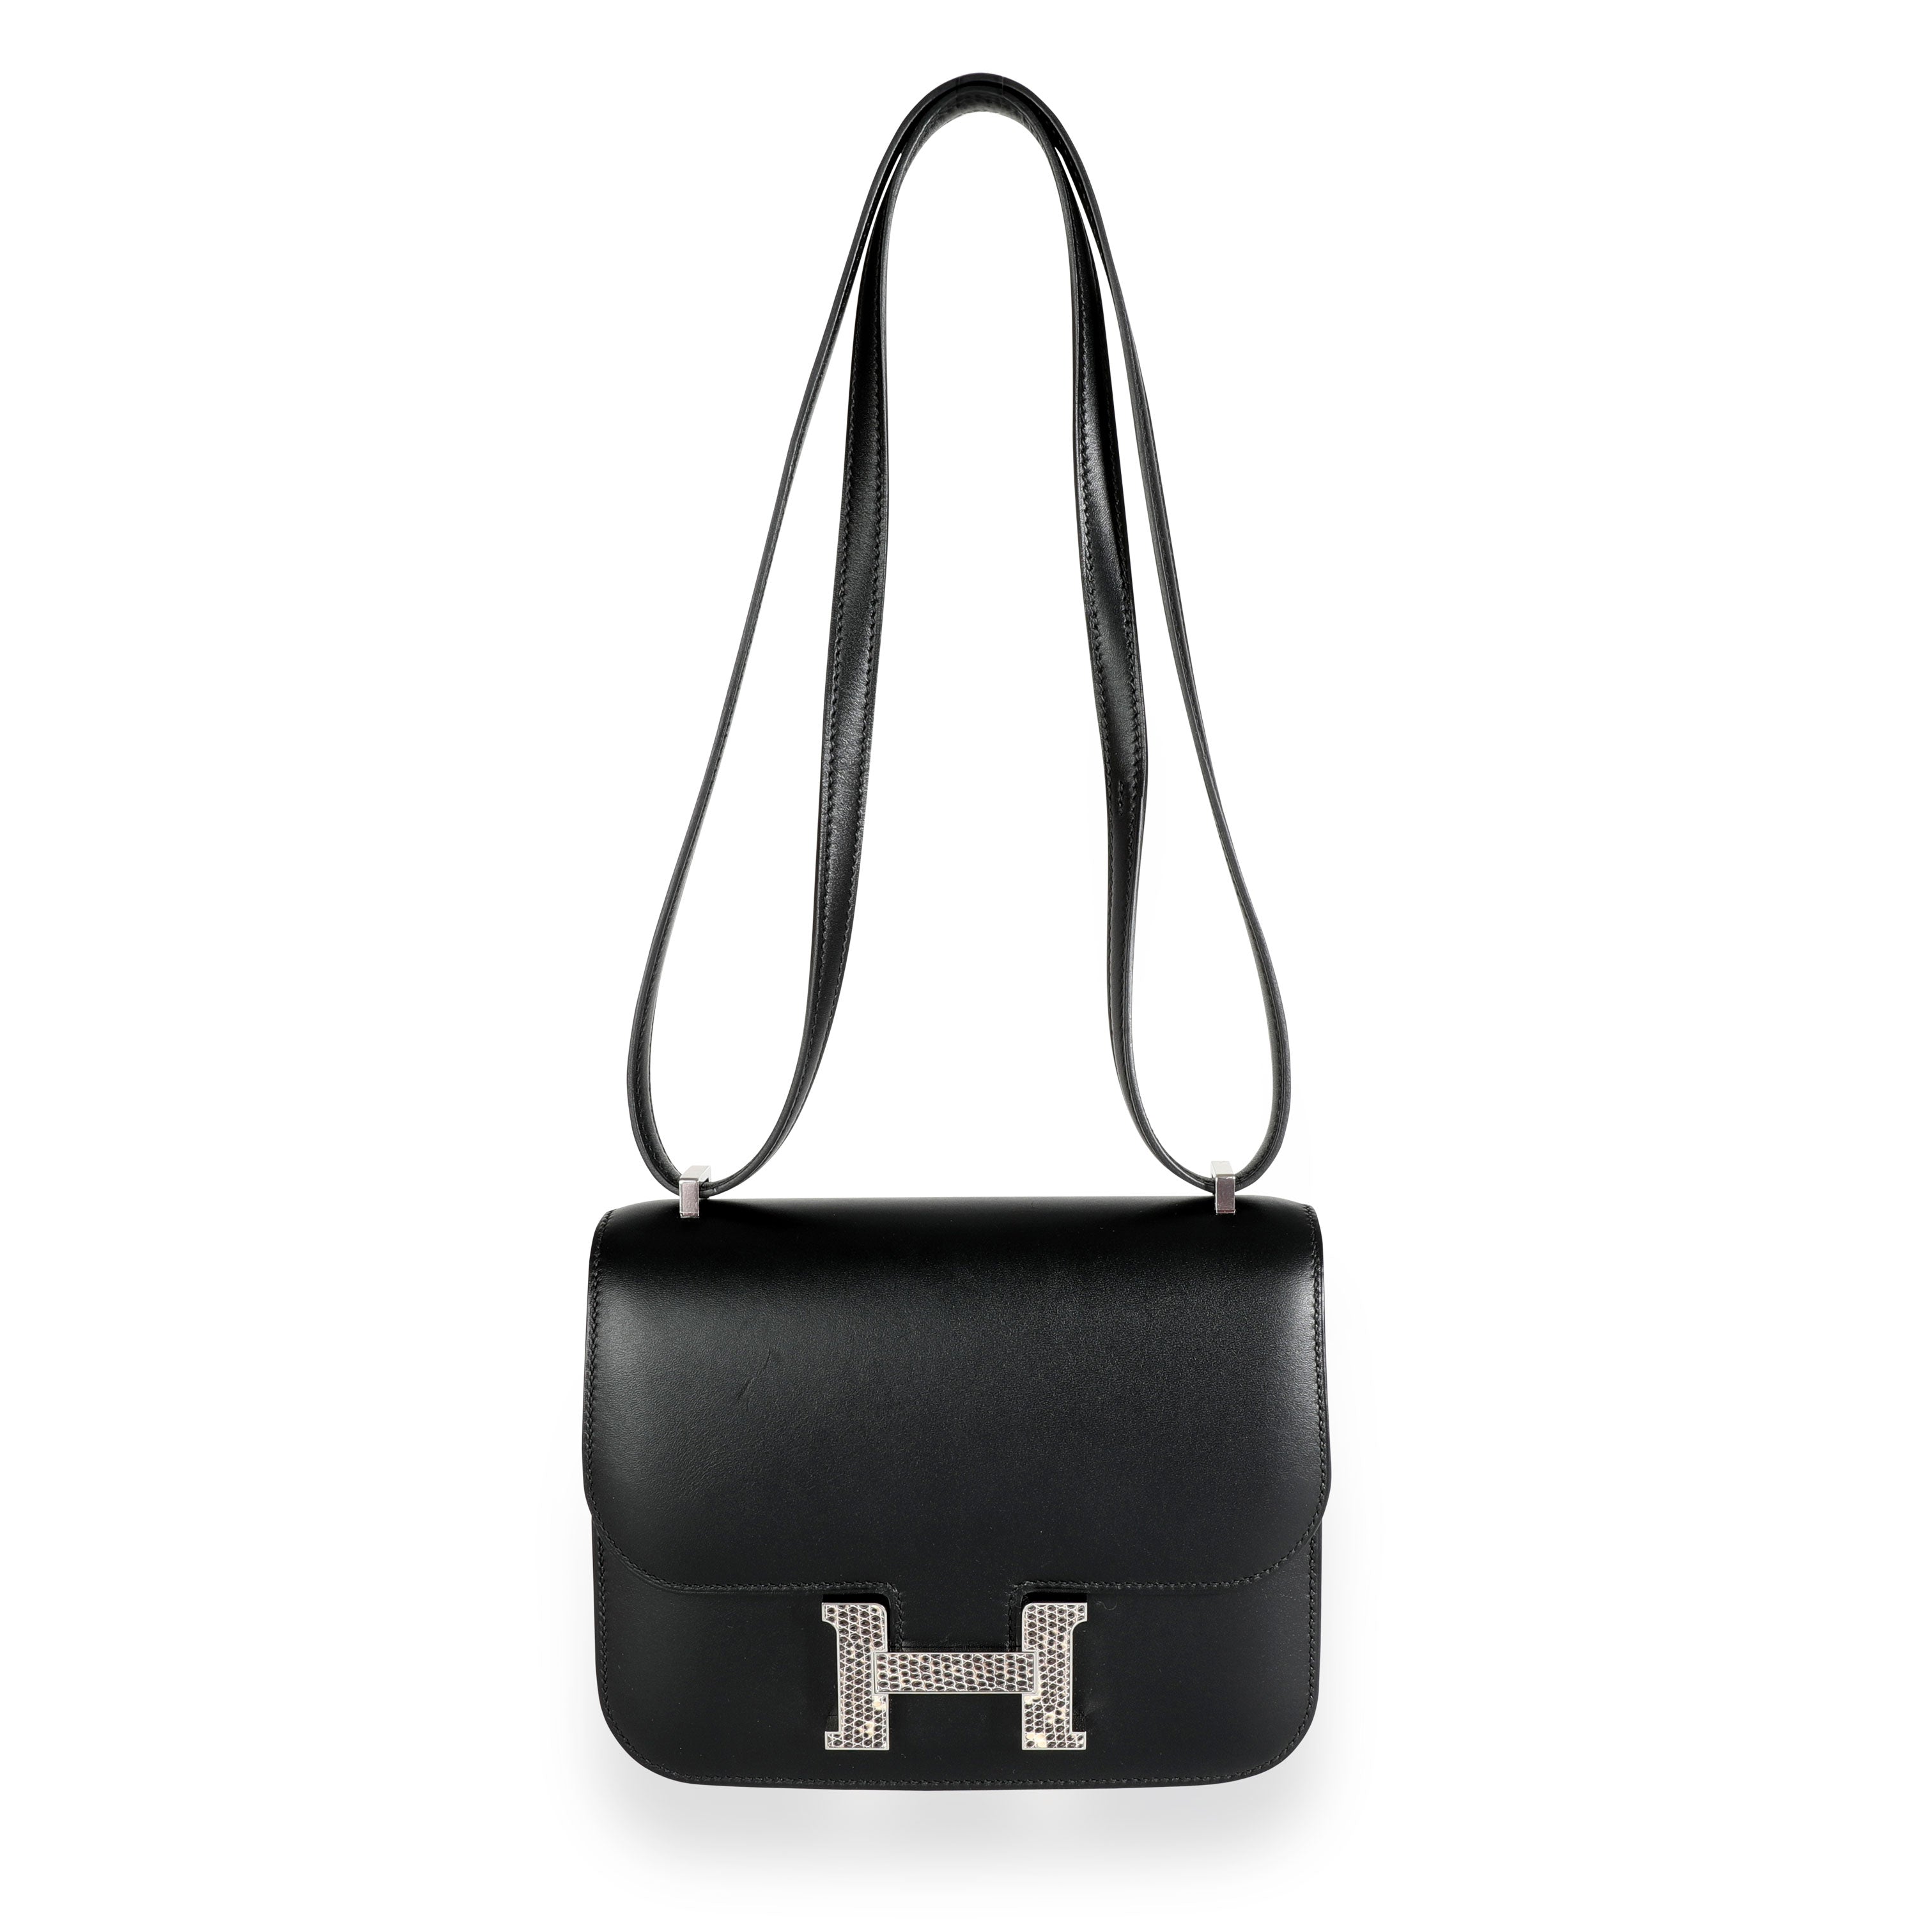 NEW Authentic HERMES Shiny BLACK LIZARD Constance Bag Mini 18cm PHW Silver